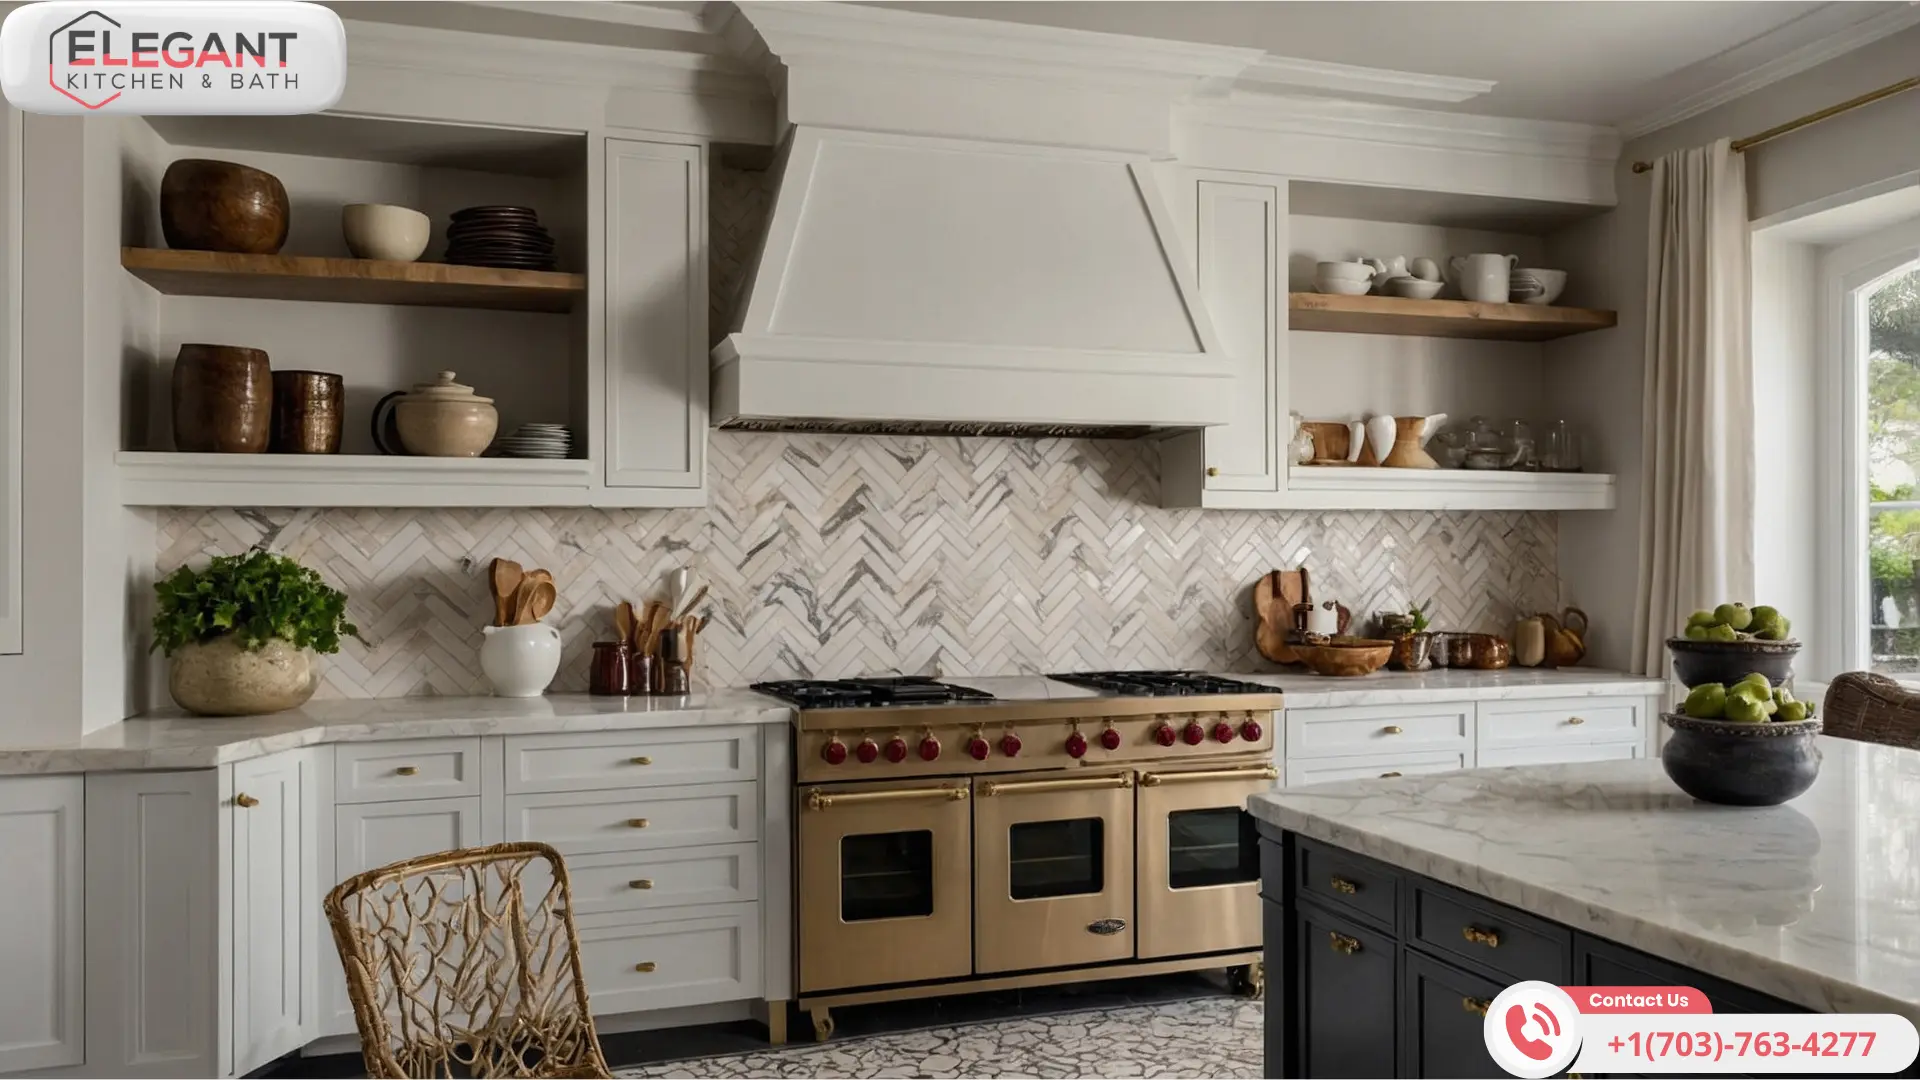 Kitchen-Backsplash-Tile-Ideas-in-Kitchen-Remodeling-with-Elegant-Kitchen-and-Bath